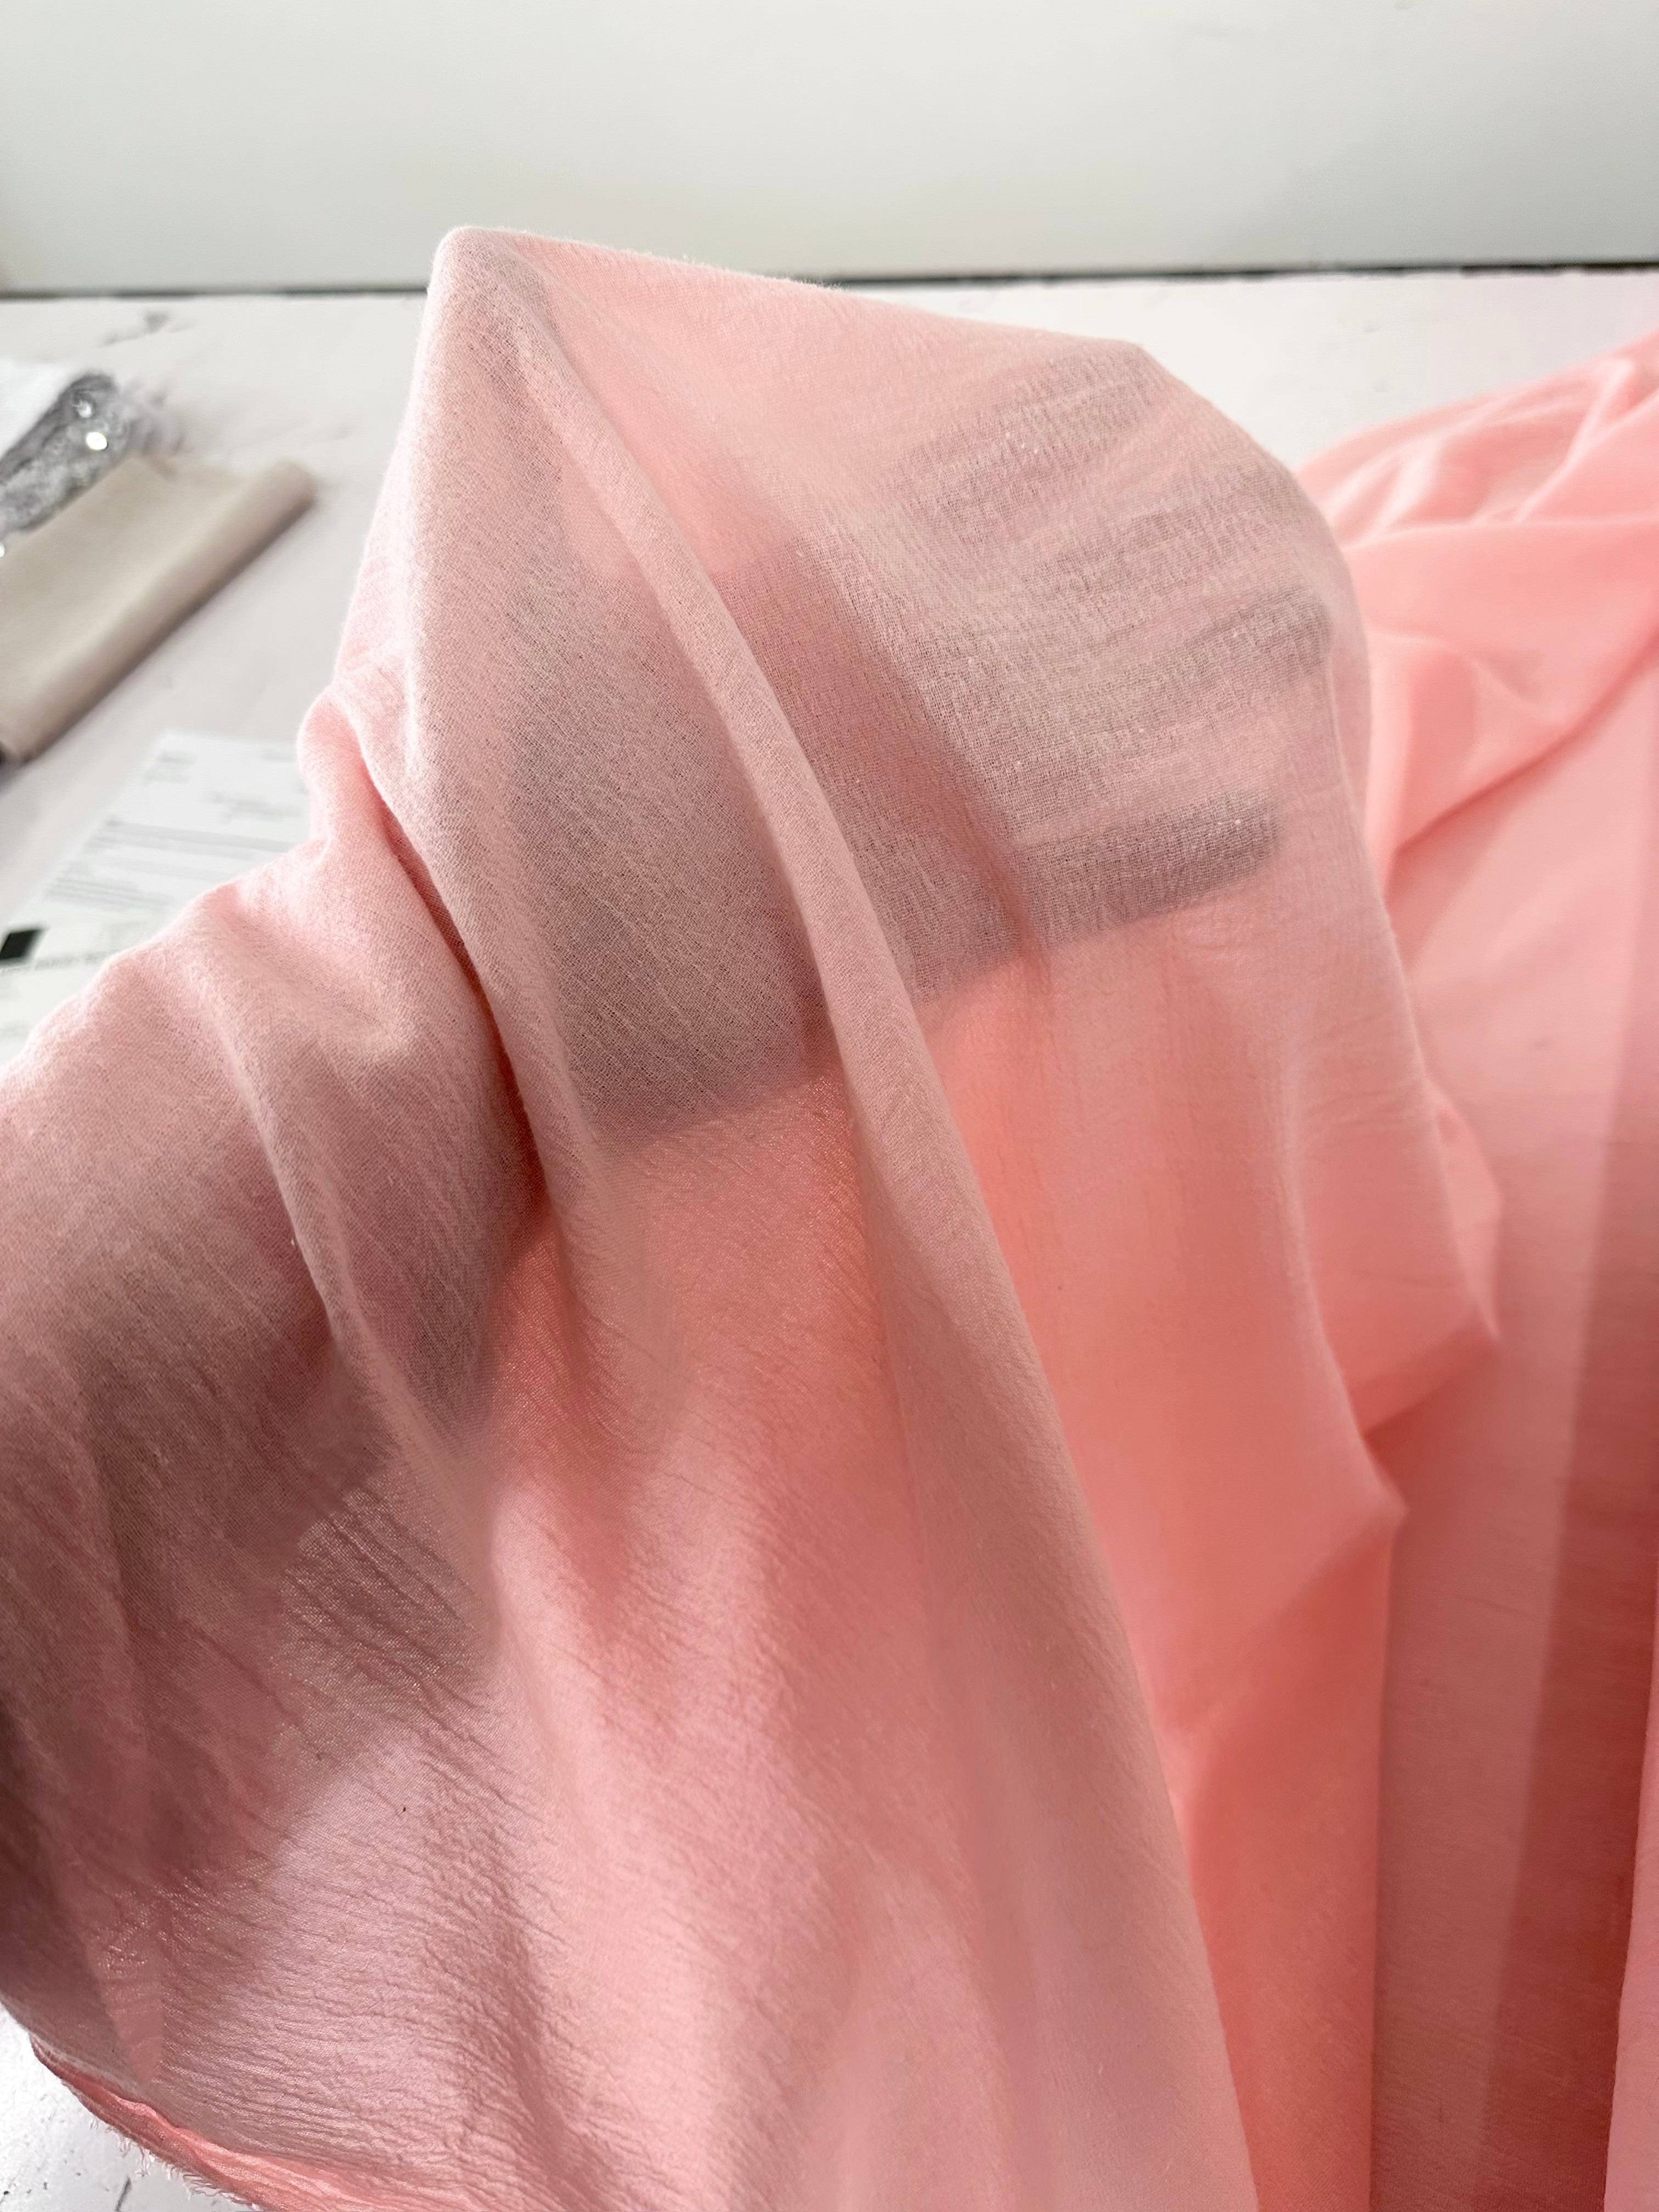 blush Crinkle Cotton Gauze, cotton gauze fabric, pink gauze fabric, light pink gauze, cotton for woman, double gauze cheap, coton gauze for bride, cotton gauze in low price